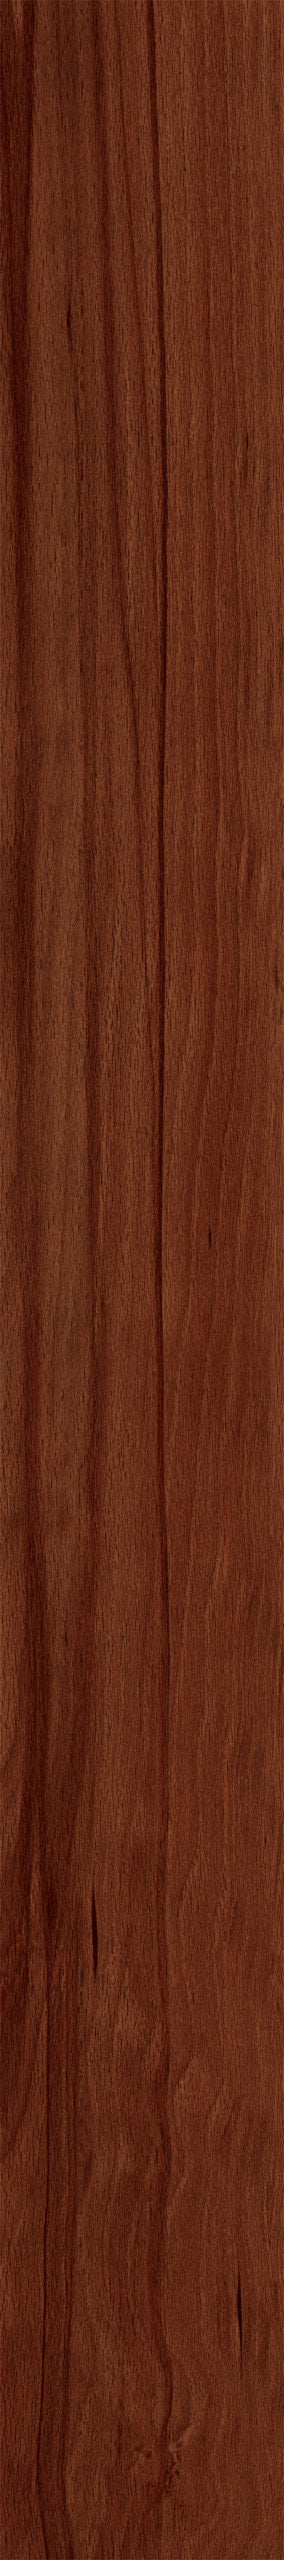 Flexco Natural Elements Sequoia Cherry NEW4D1O613 4" x 36" x 1/8" Luxury Vinyl Plank (36 SF/Box)